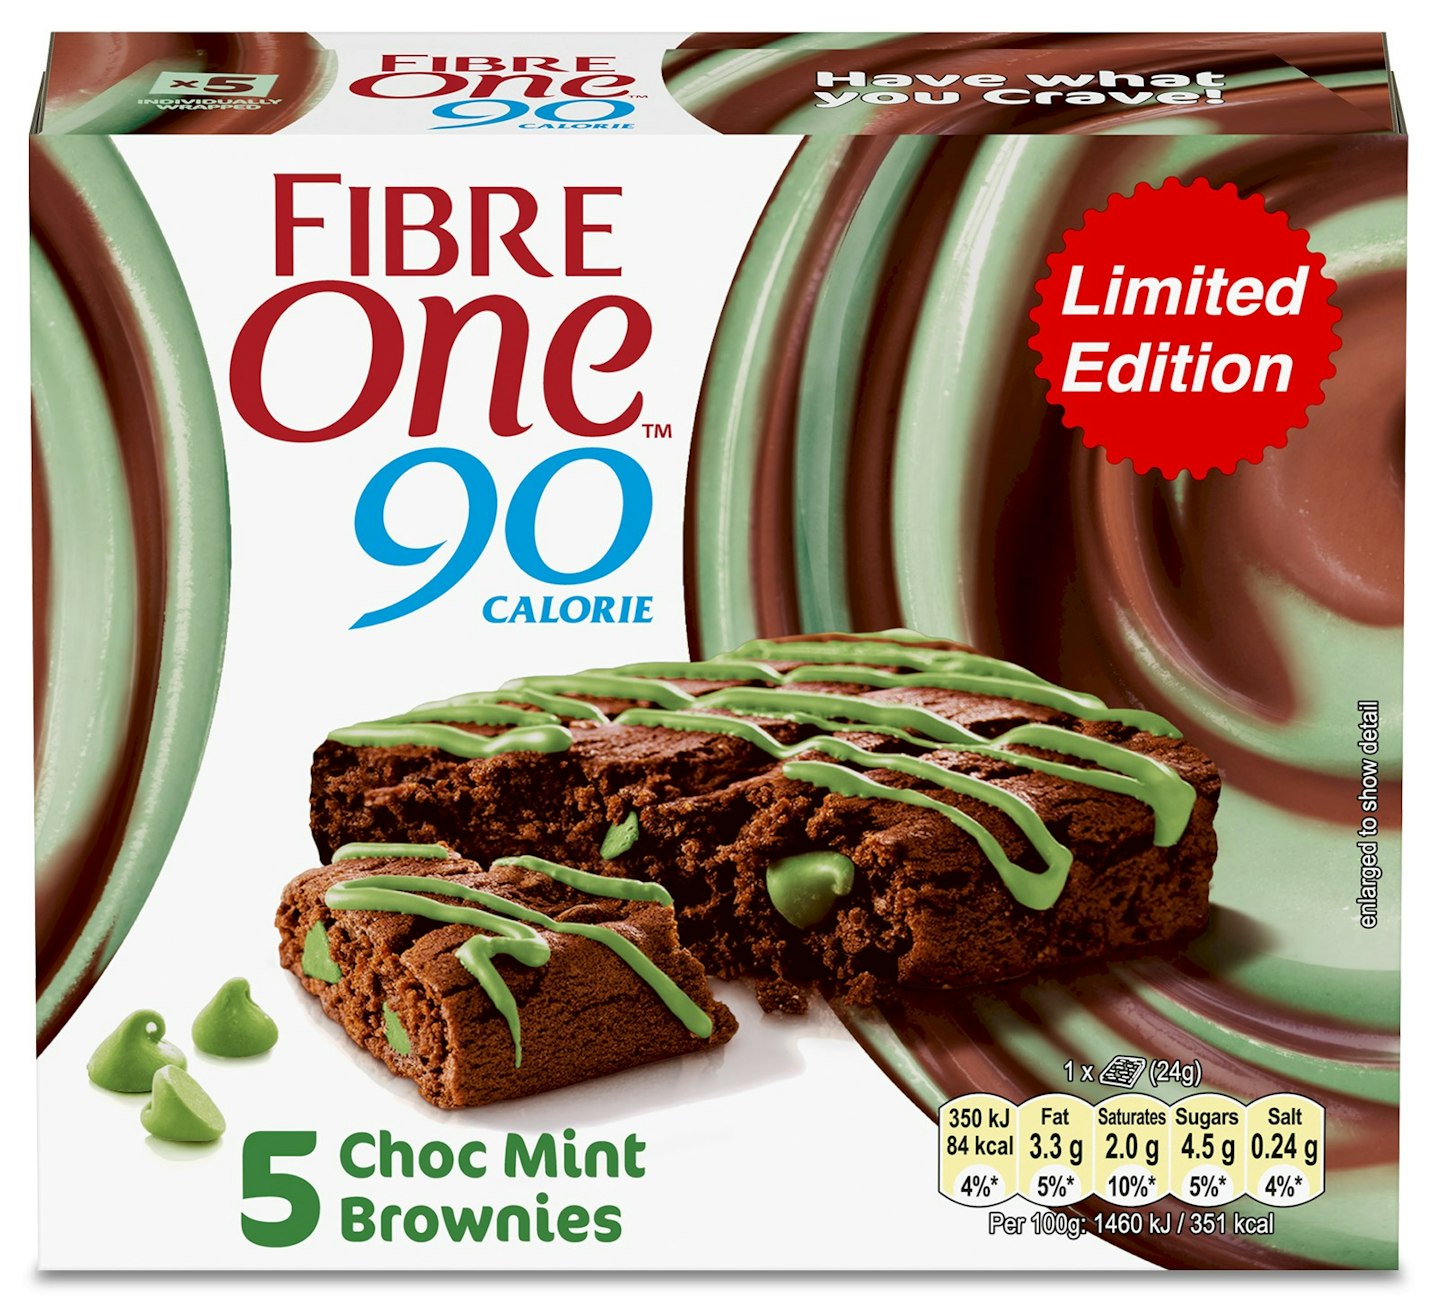 Fibre One 90 Chocolate Mint Brownie